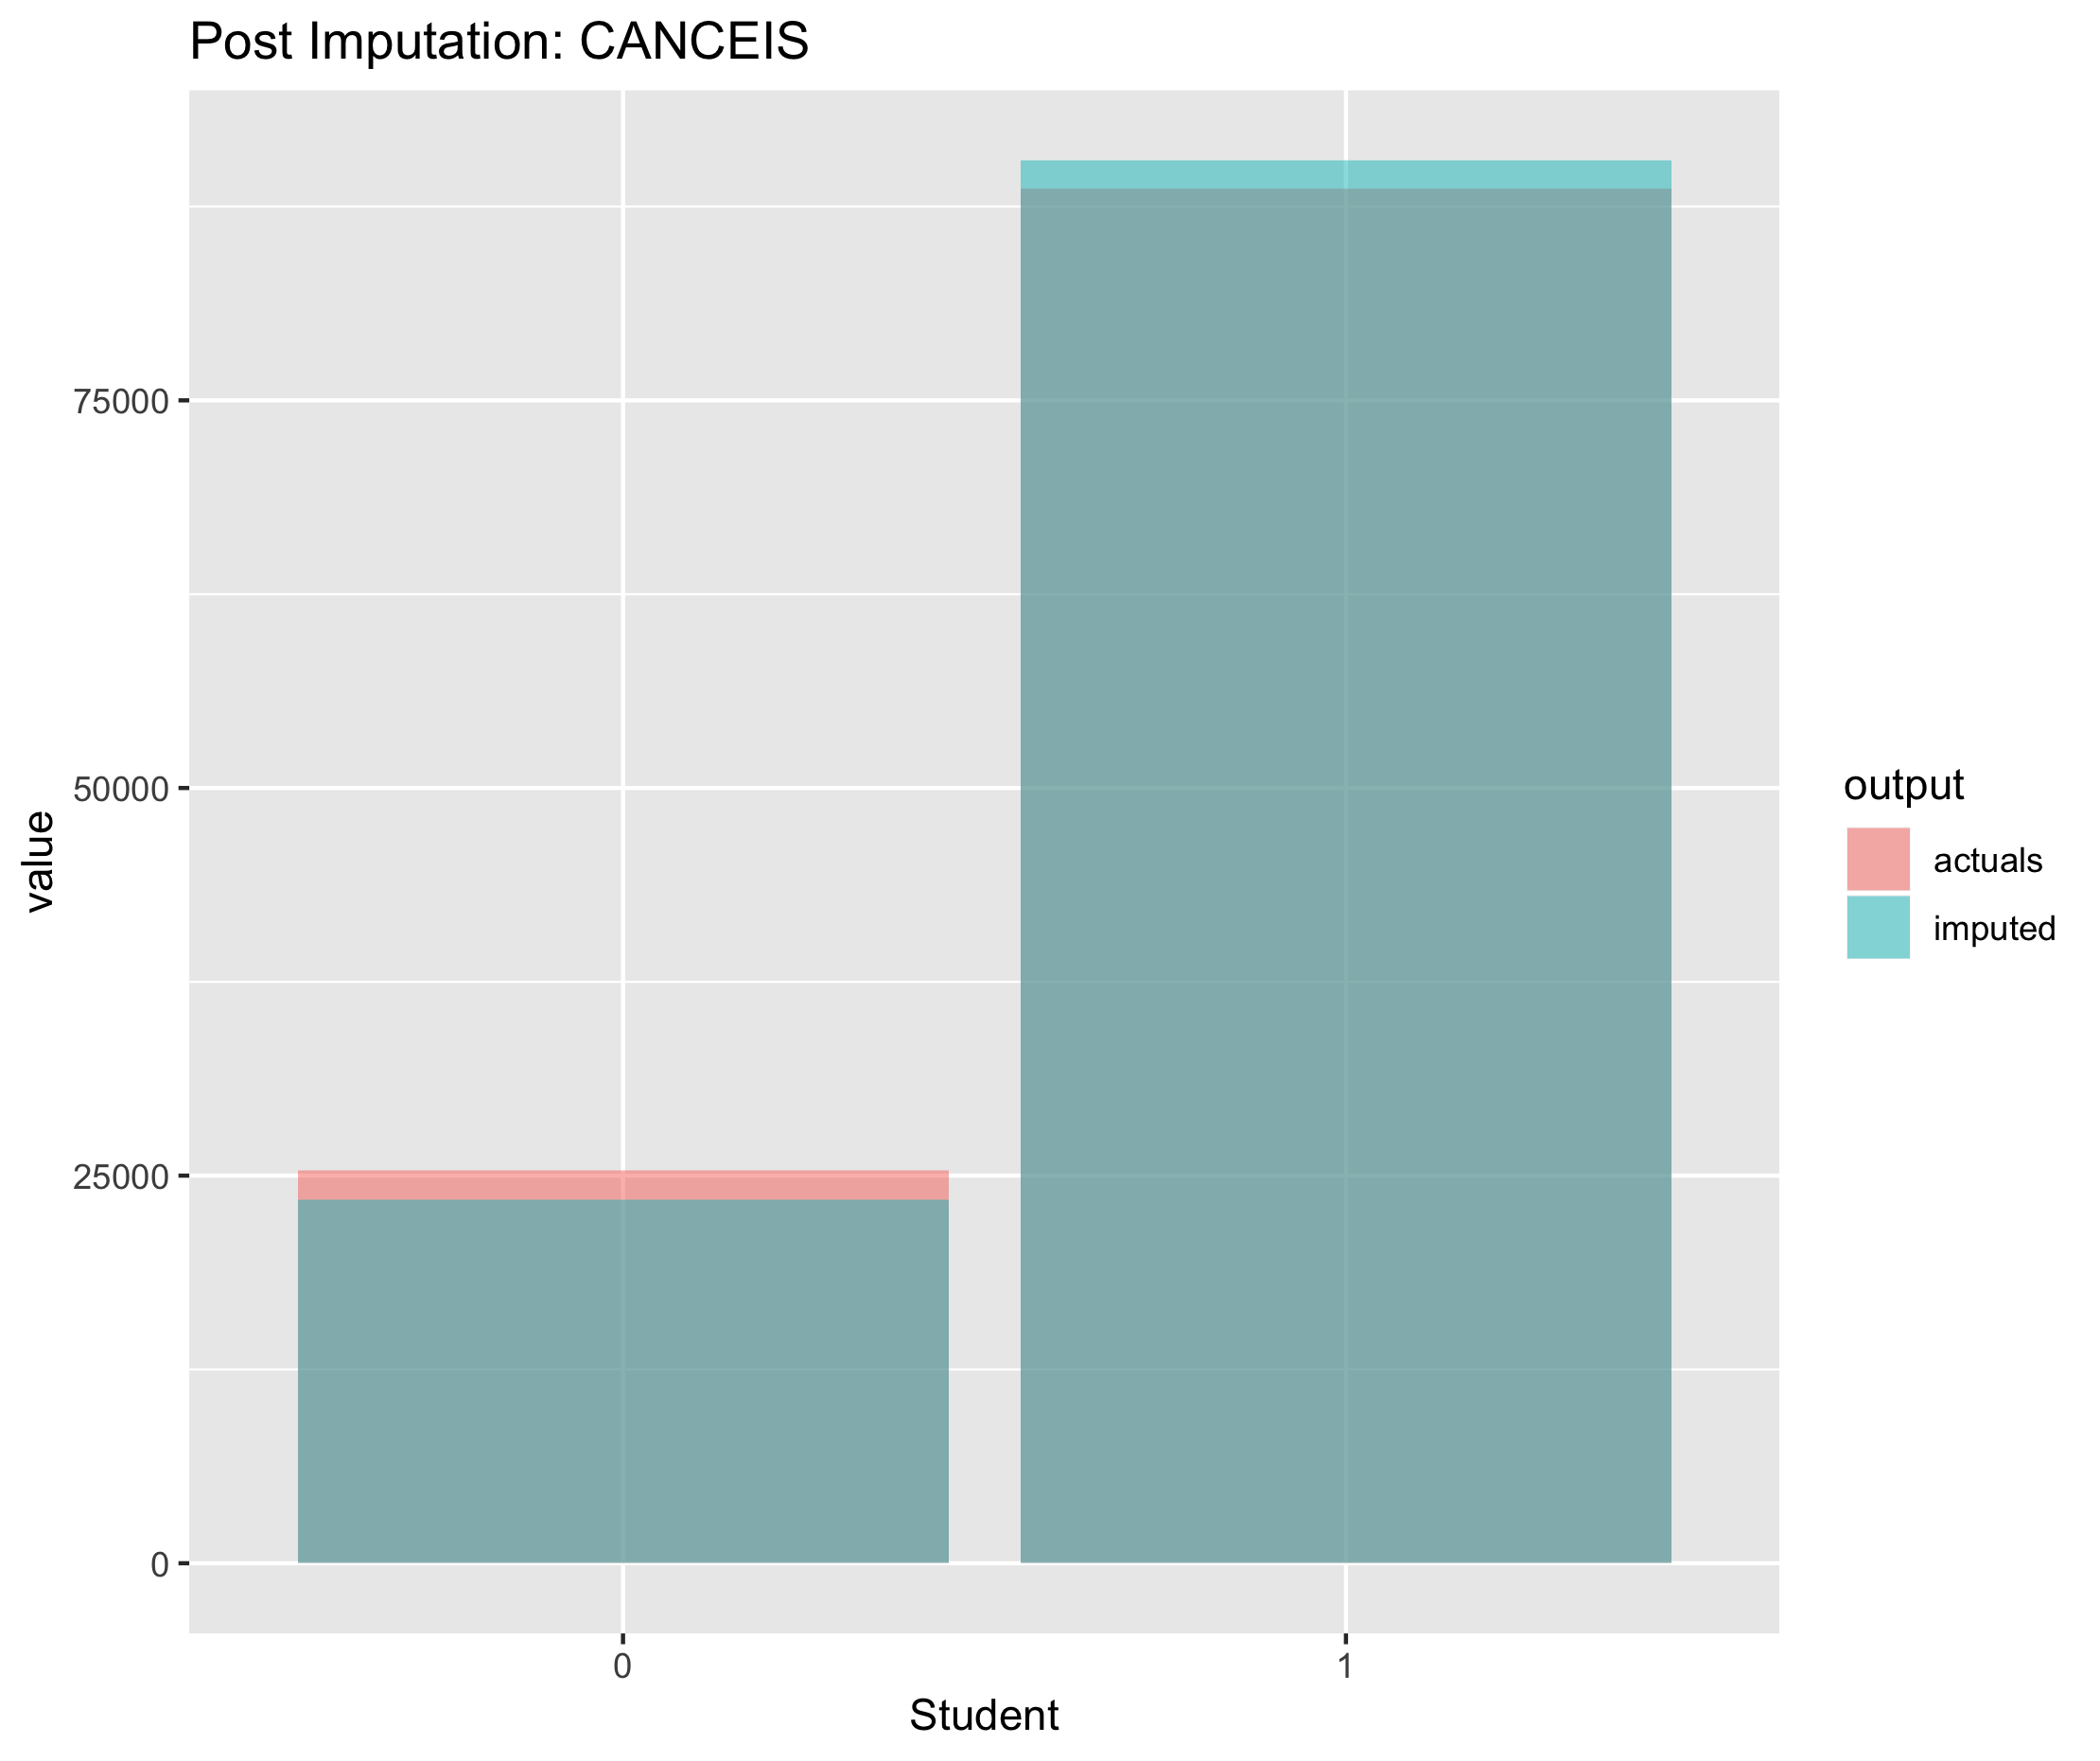 Figure 6.23. Post imputation distribution of economic activity using CANCEIS imputation